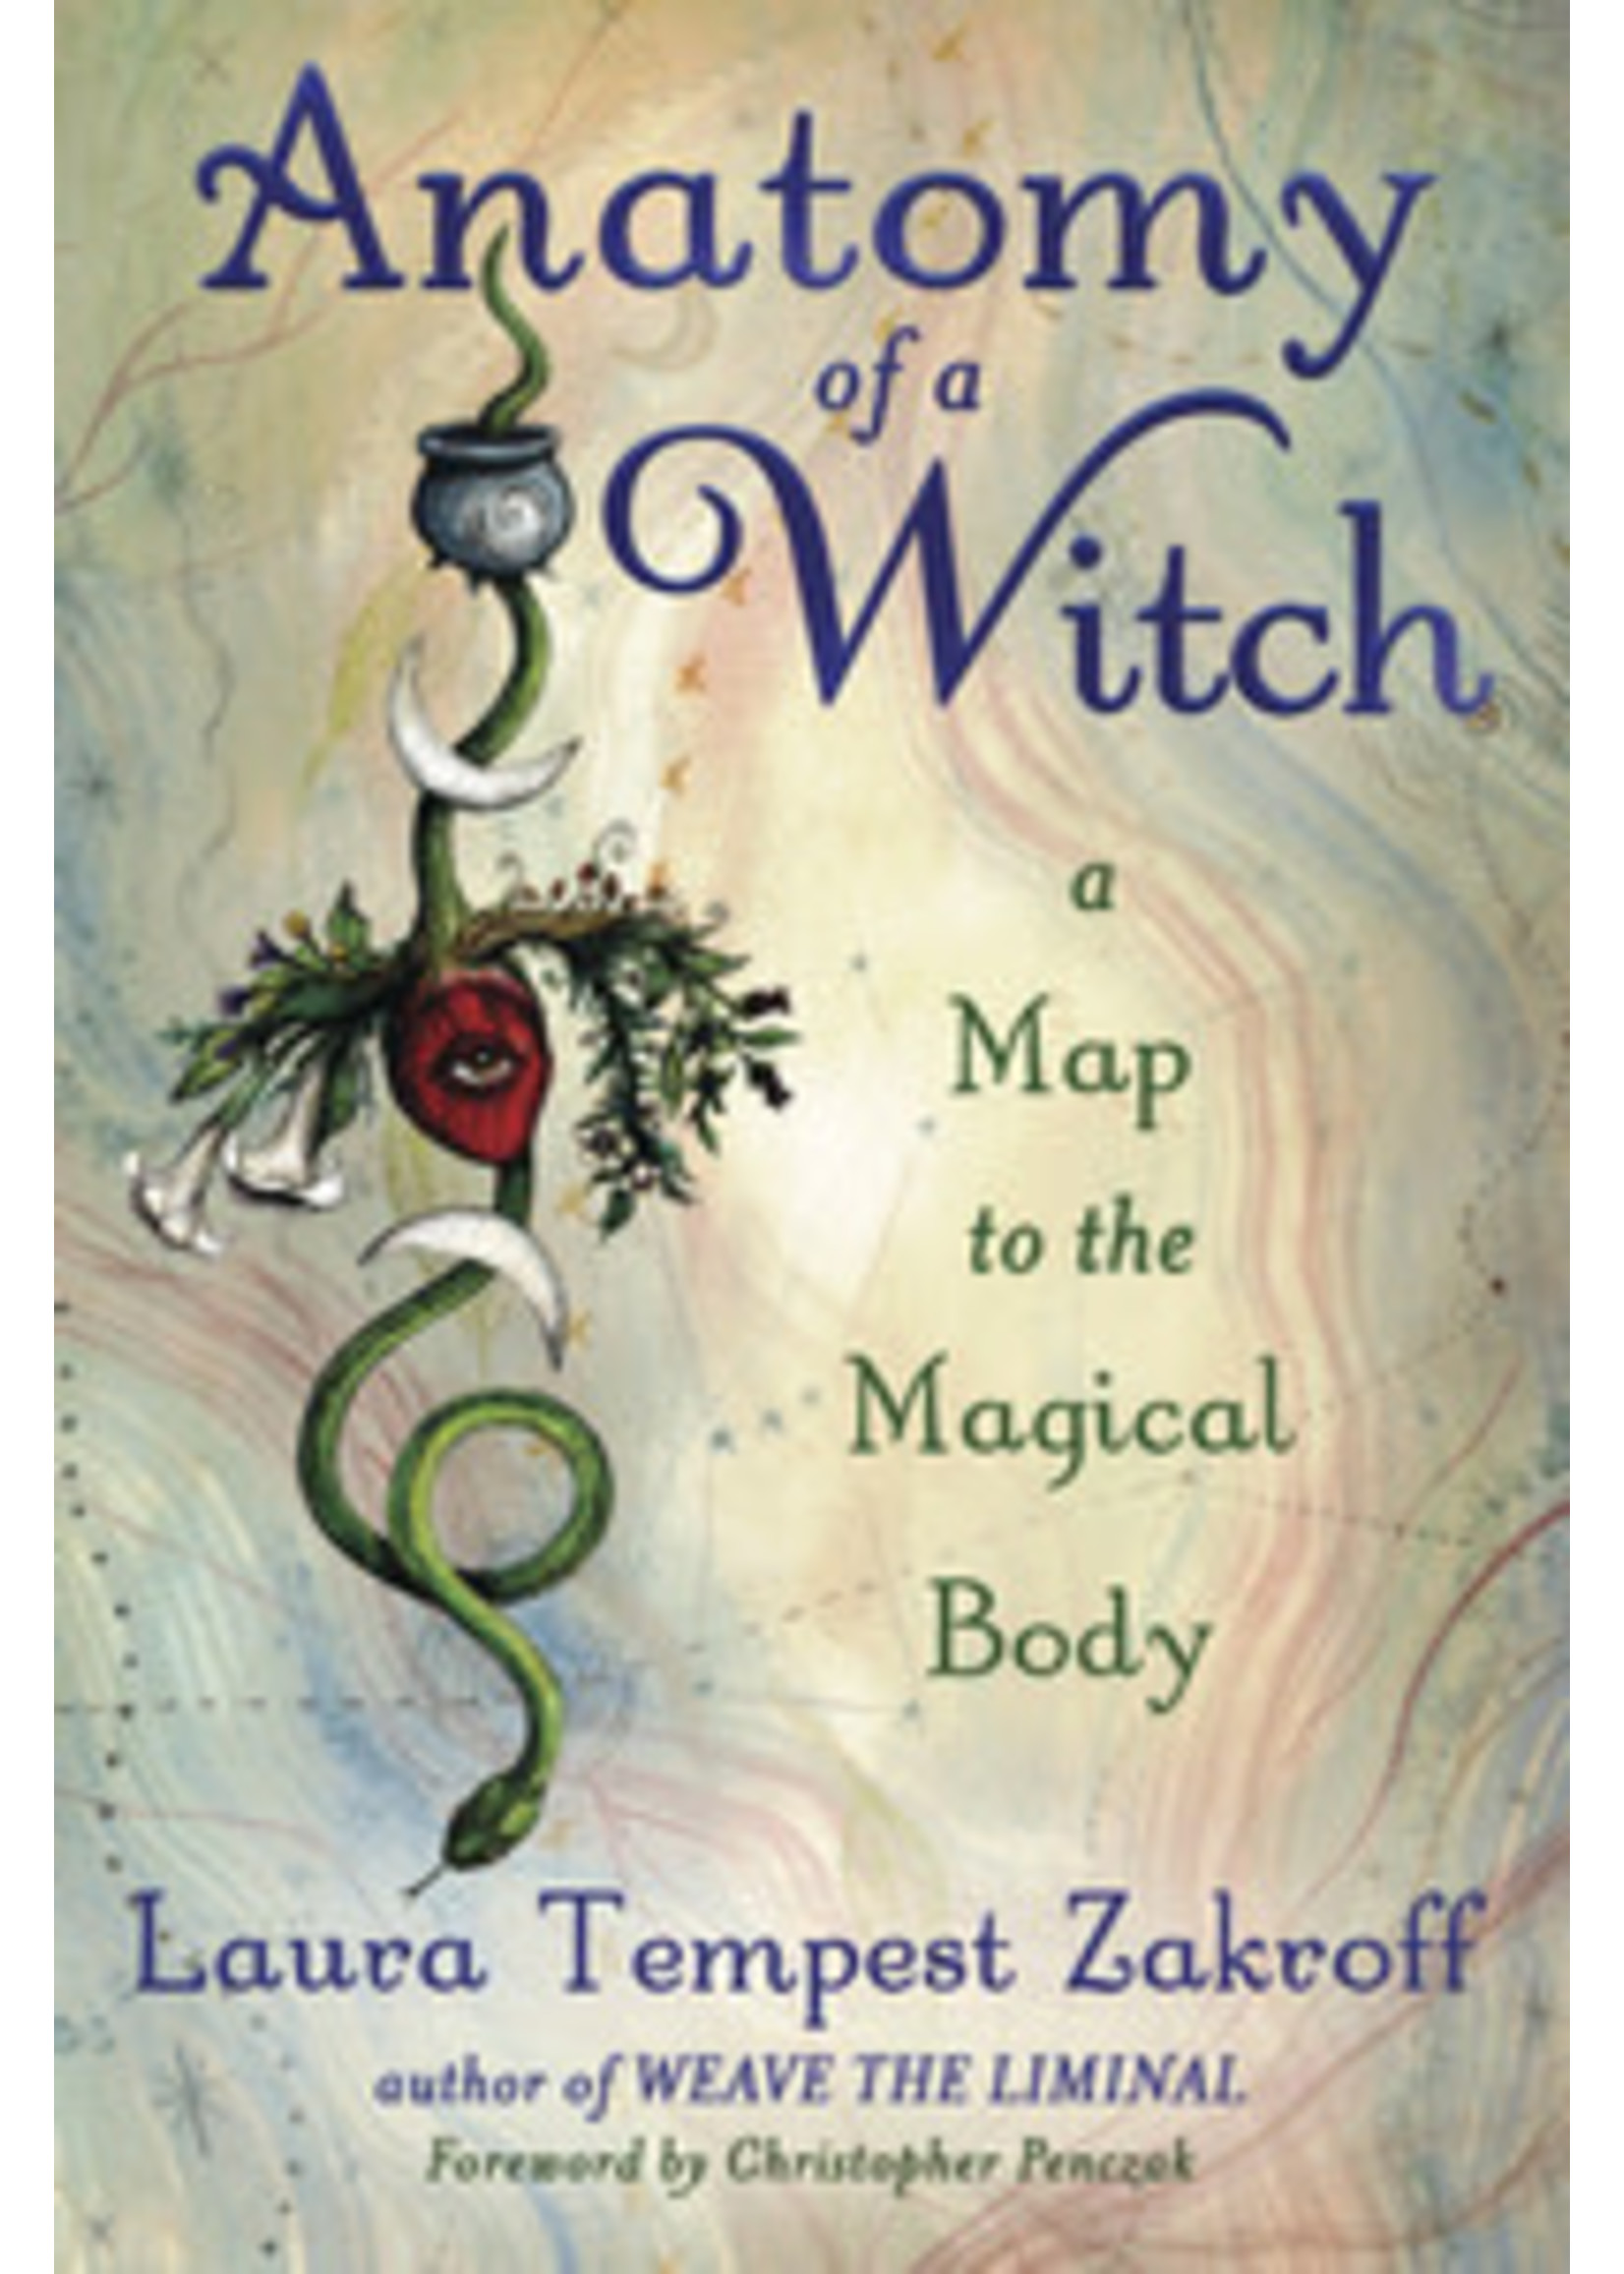 Anatomy of a Witch by Laura Tempest Zakroff